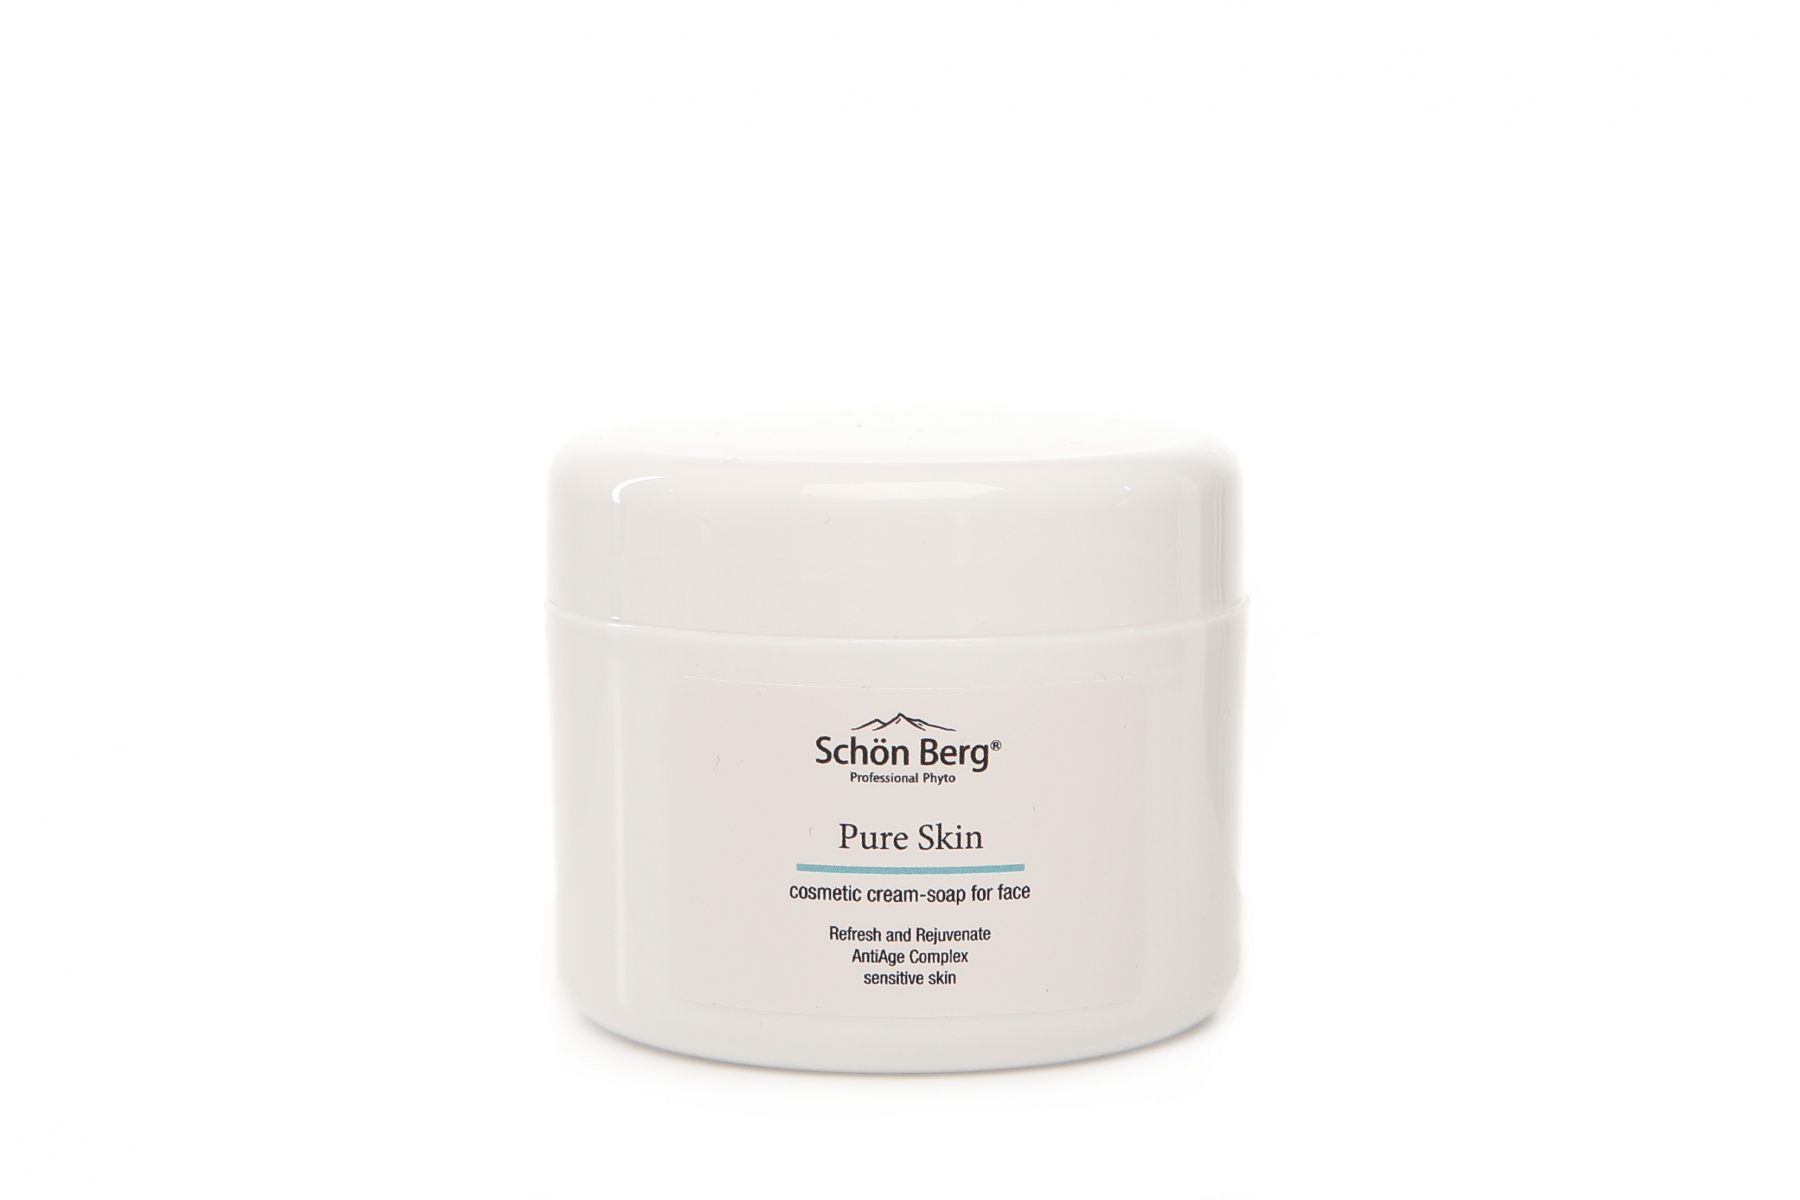 Schön Berg Pure Skin cream-soap for face - Косметическое крем-мыло для умывания